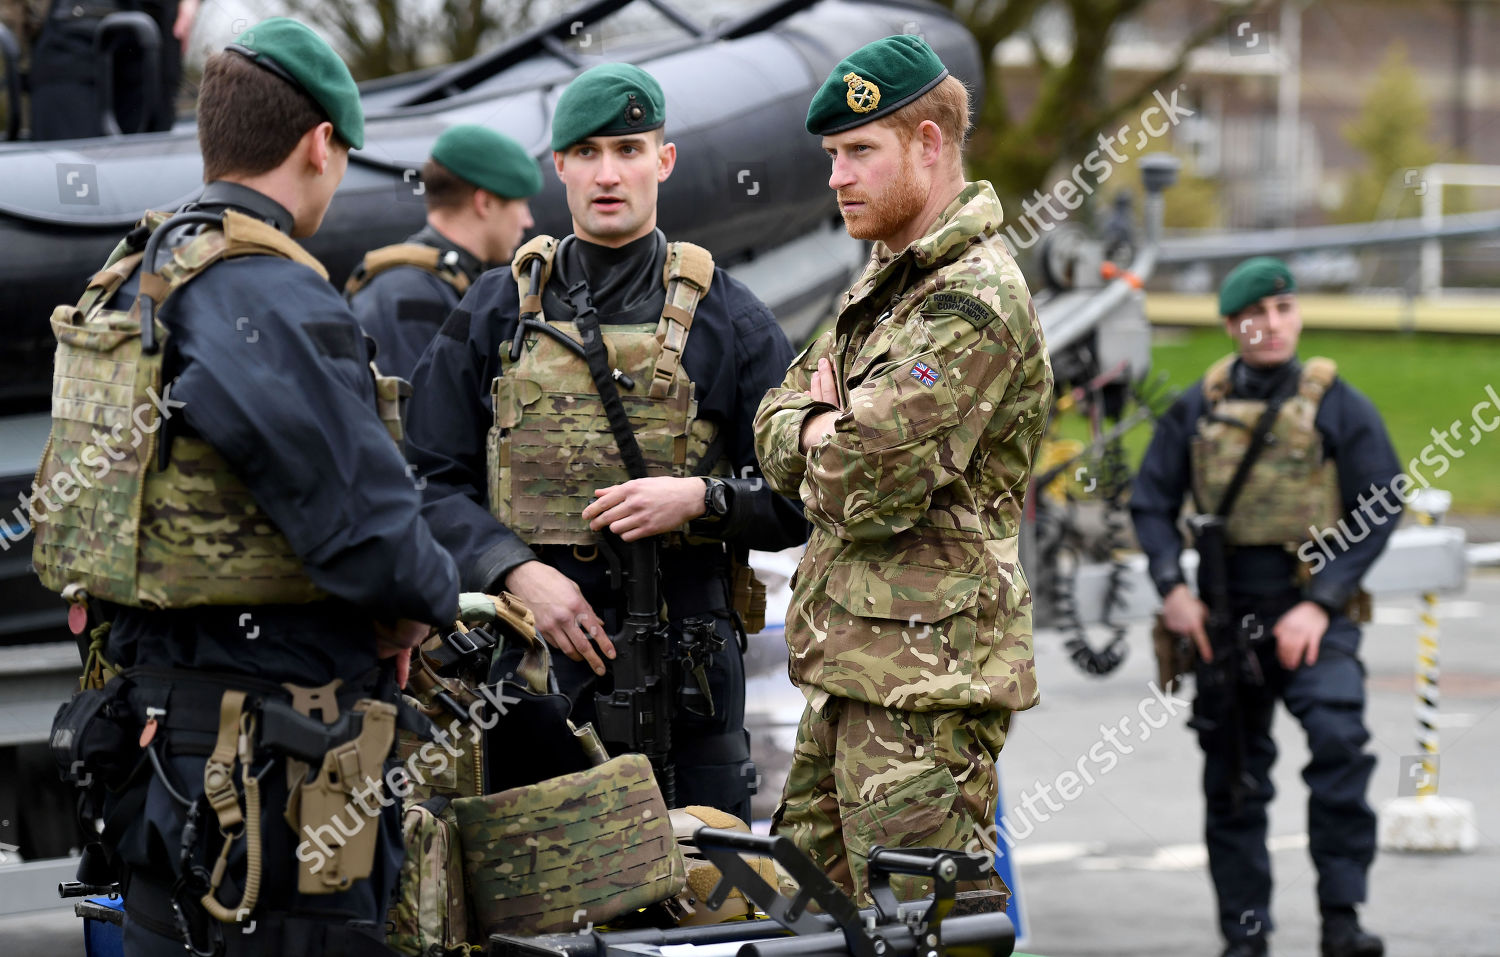 42 Commando Royal Marines Paracord Bracelet 